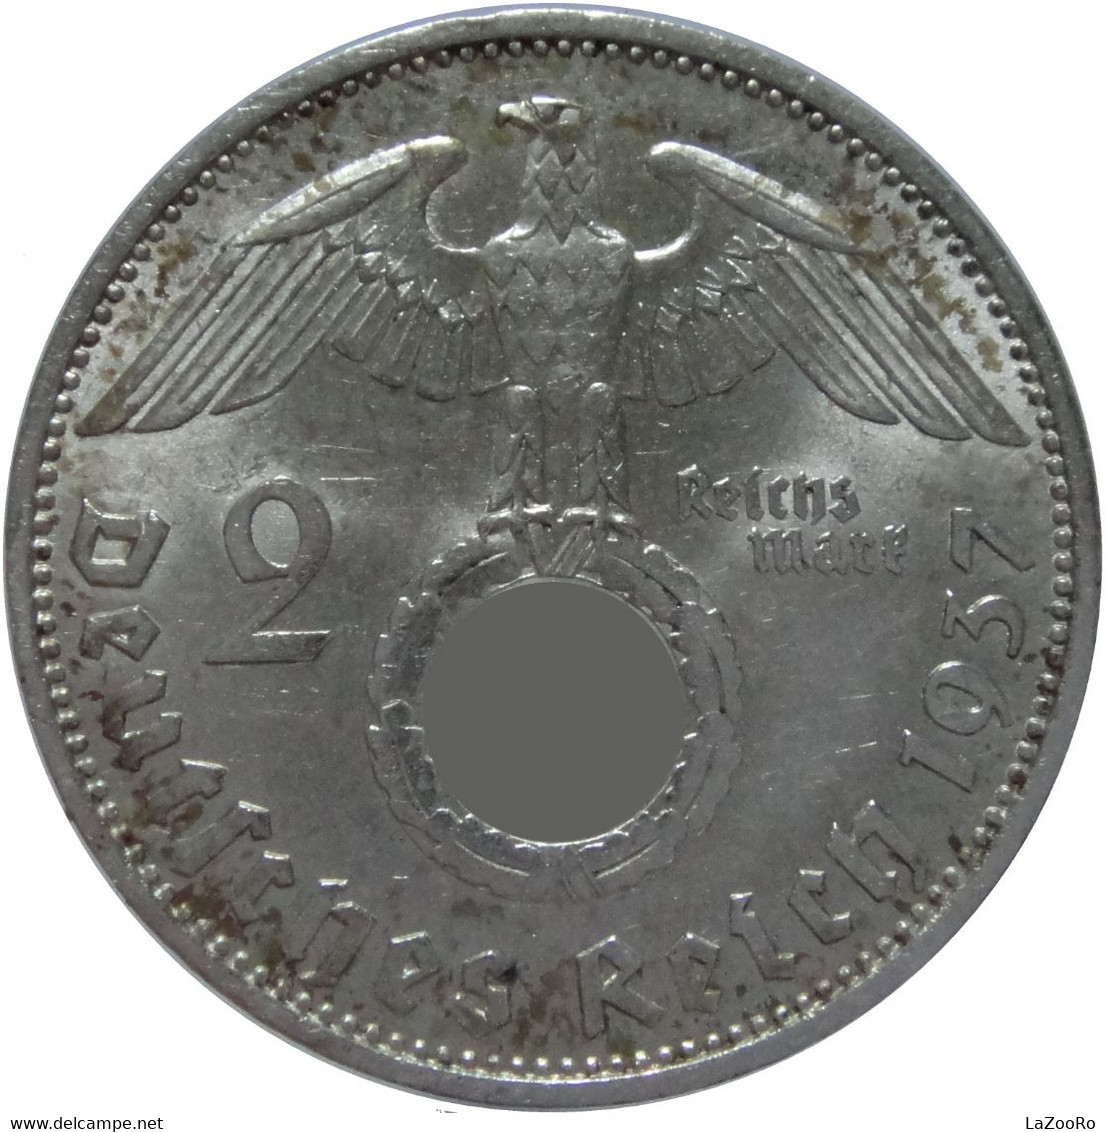 LaZooRo: Germany 2 Mark 1937 A UNC - Silver - 2 Reichsmark